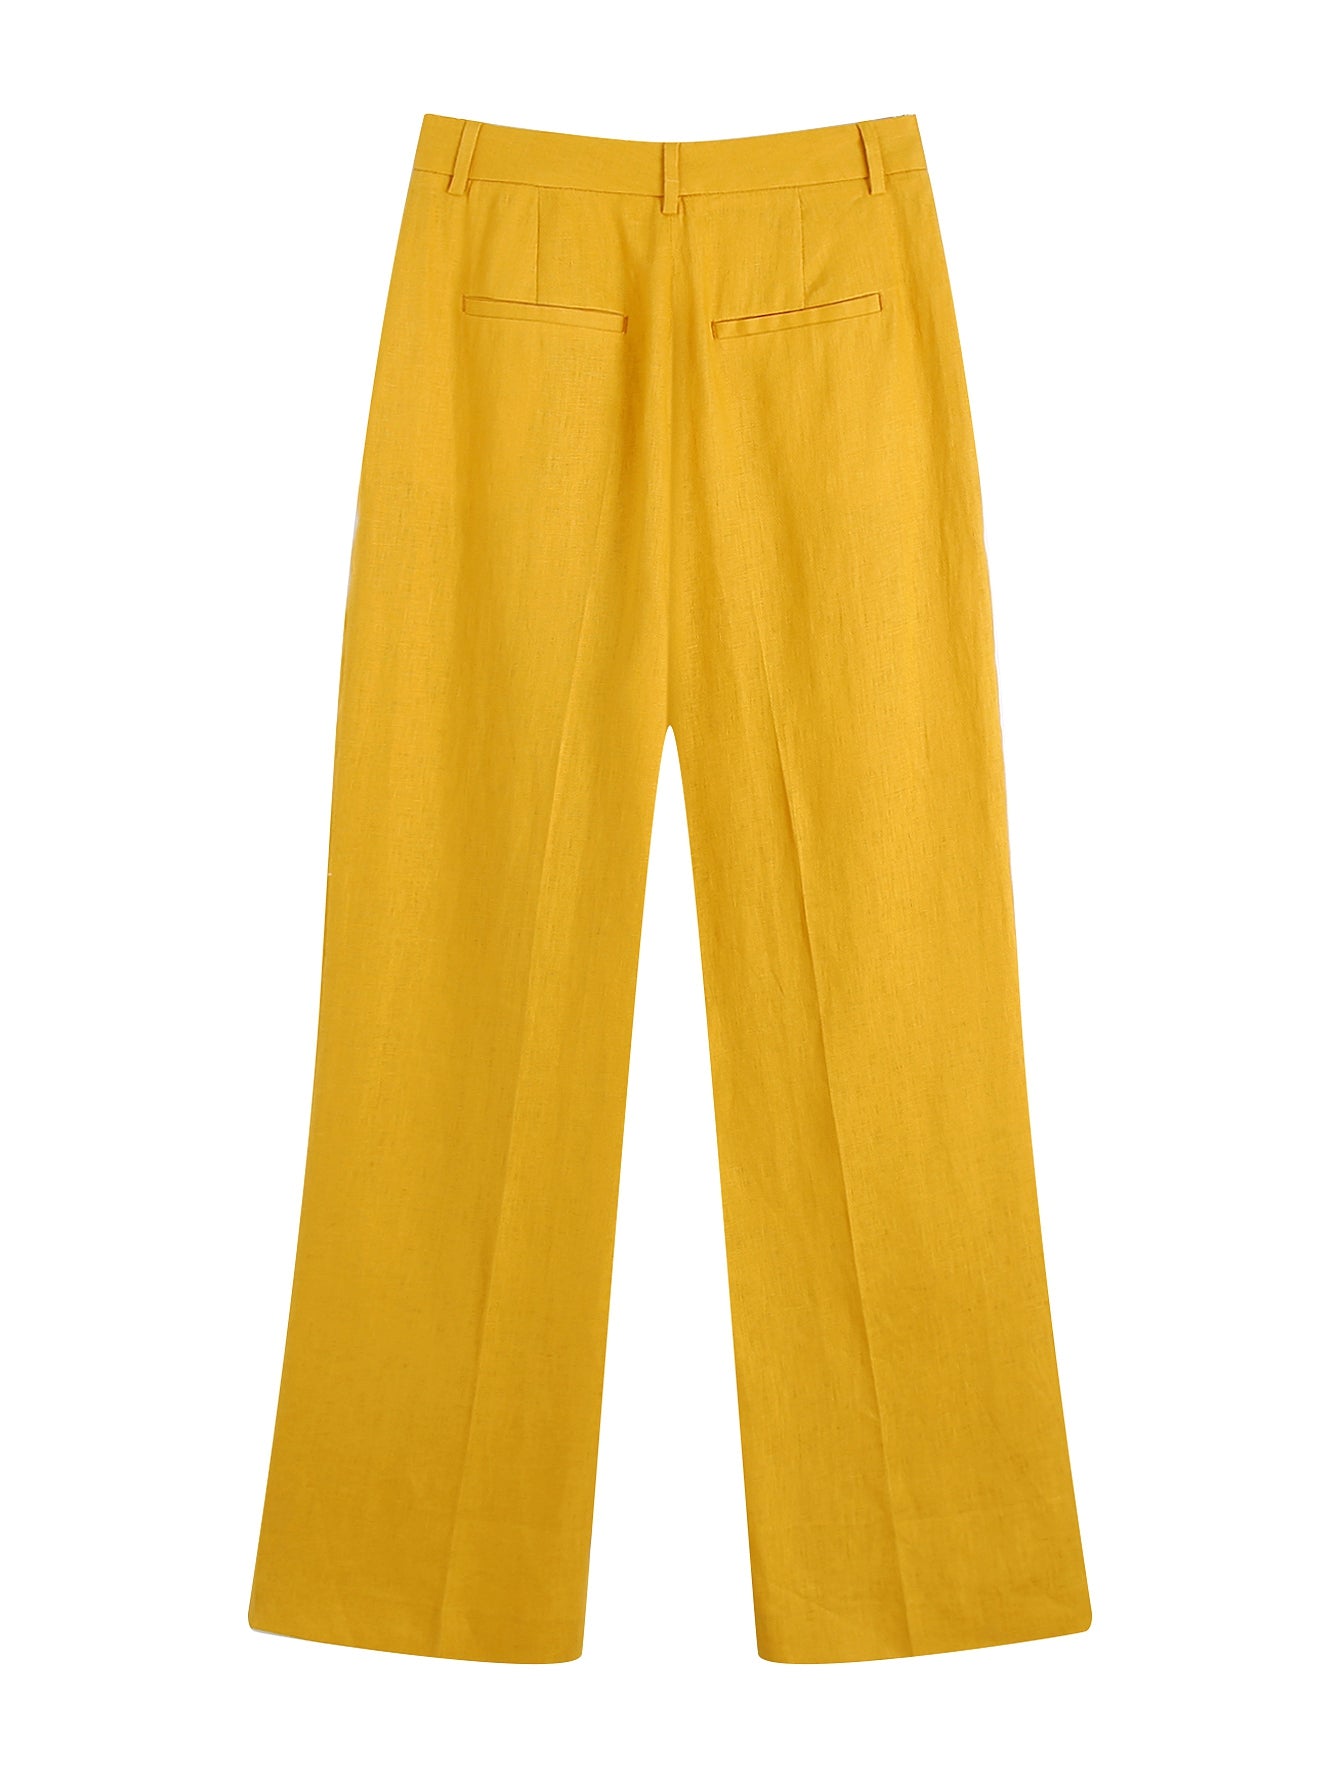 Summer Retro High Waist Slimming Yellow Trousers Straight Pants Women